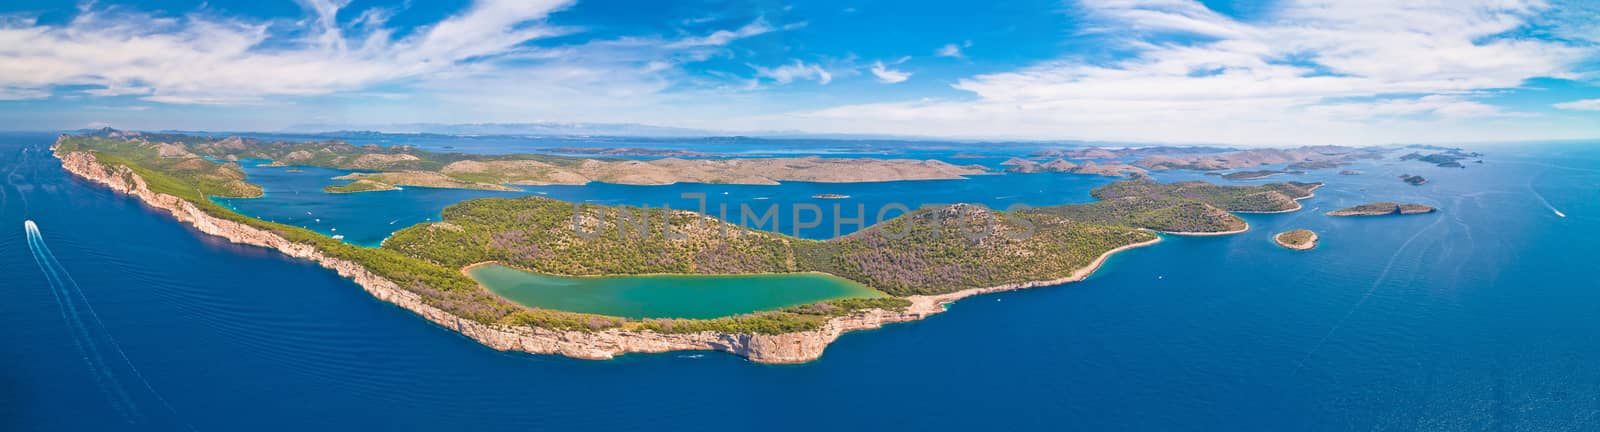 Telascica nature park and green Mir lake on Dugi Otok island aer by xbrchx